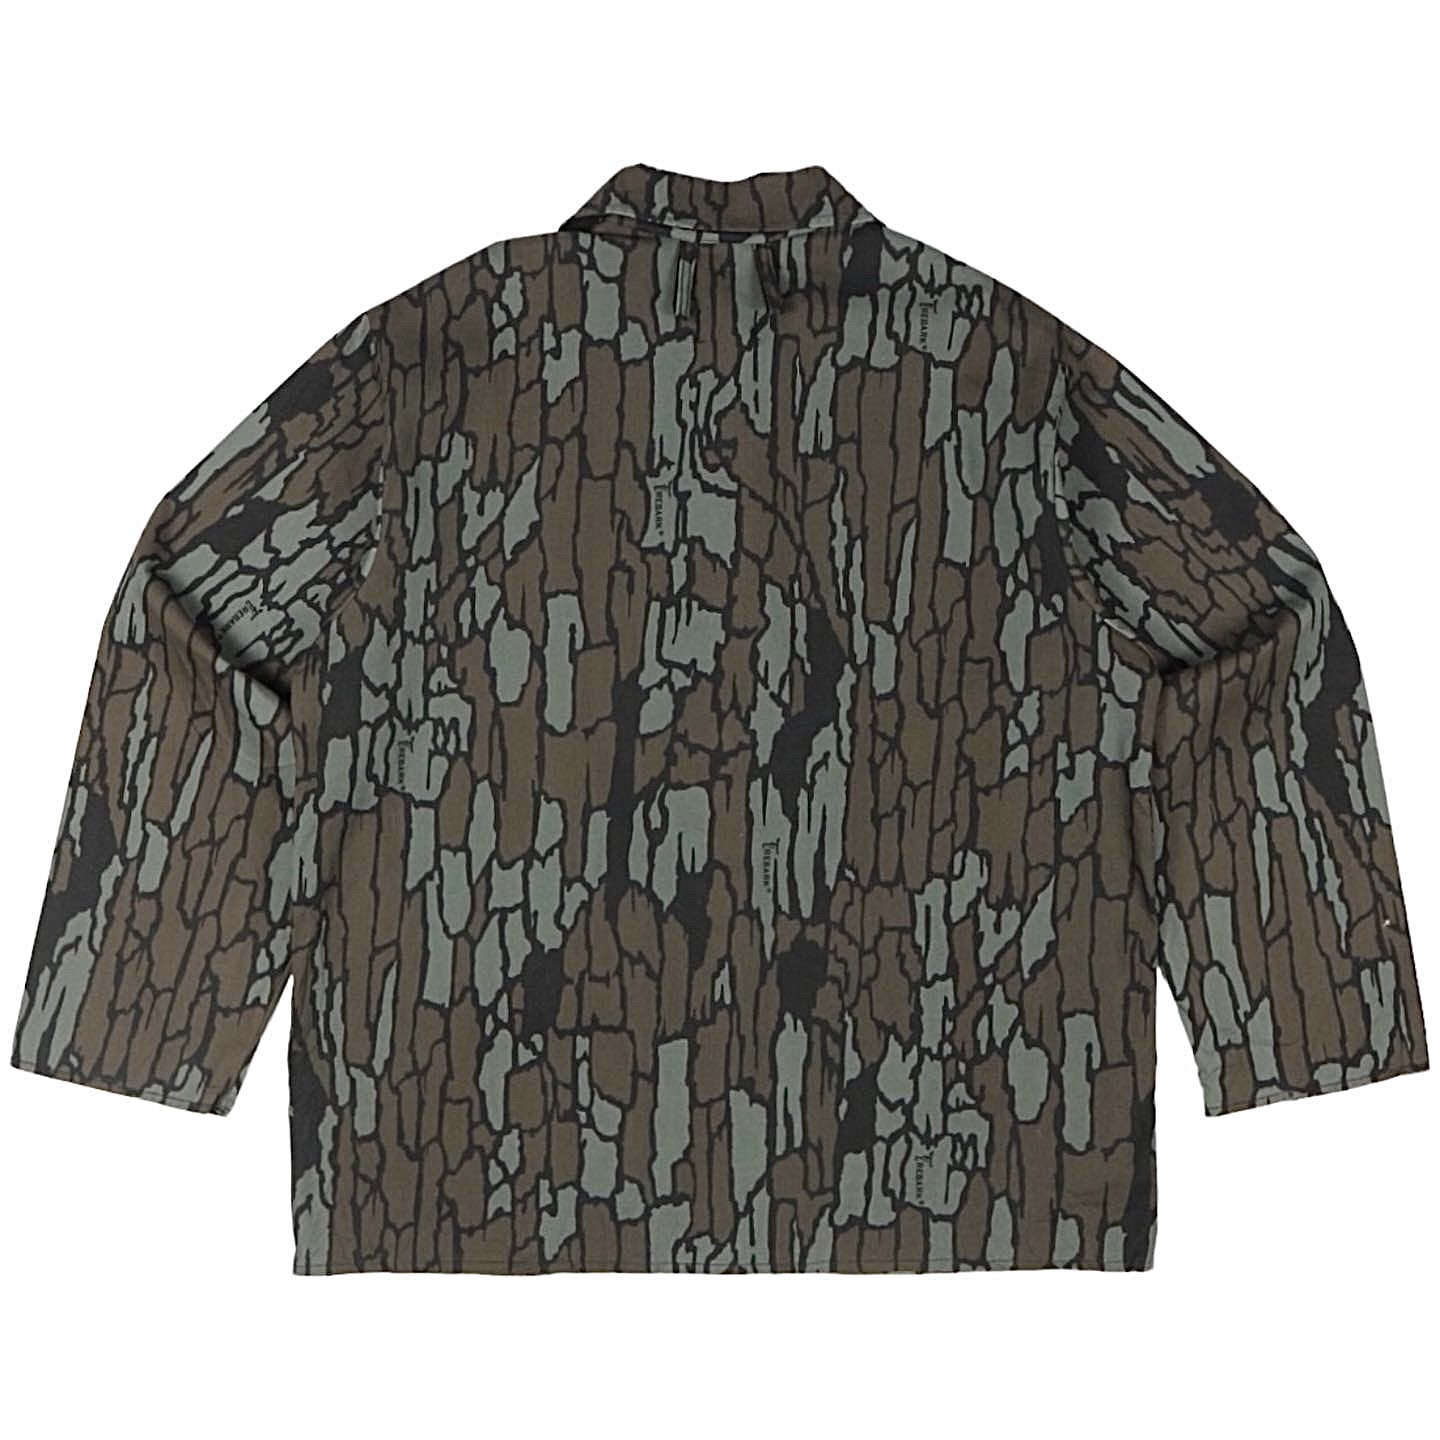 Vintage OcoeE USA Realtree Hunting Jacket Size XL